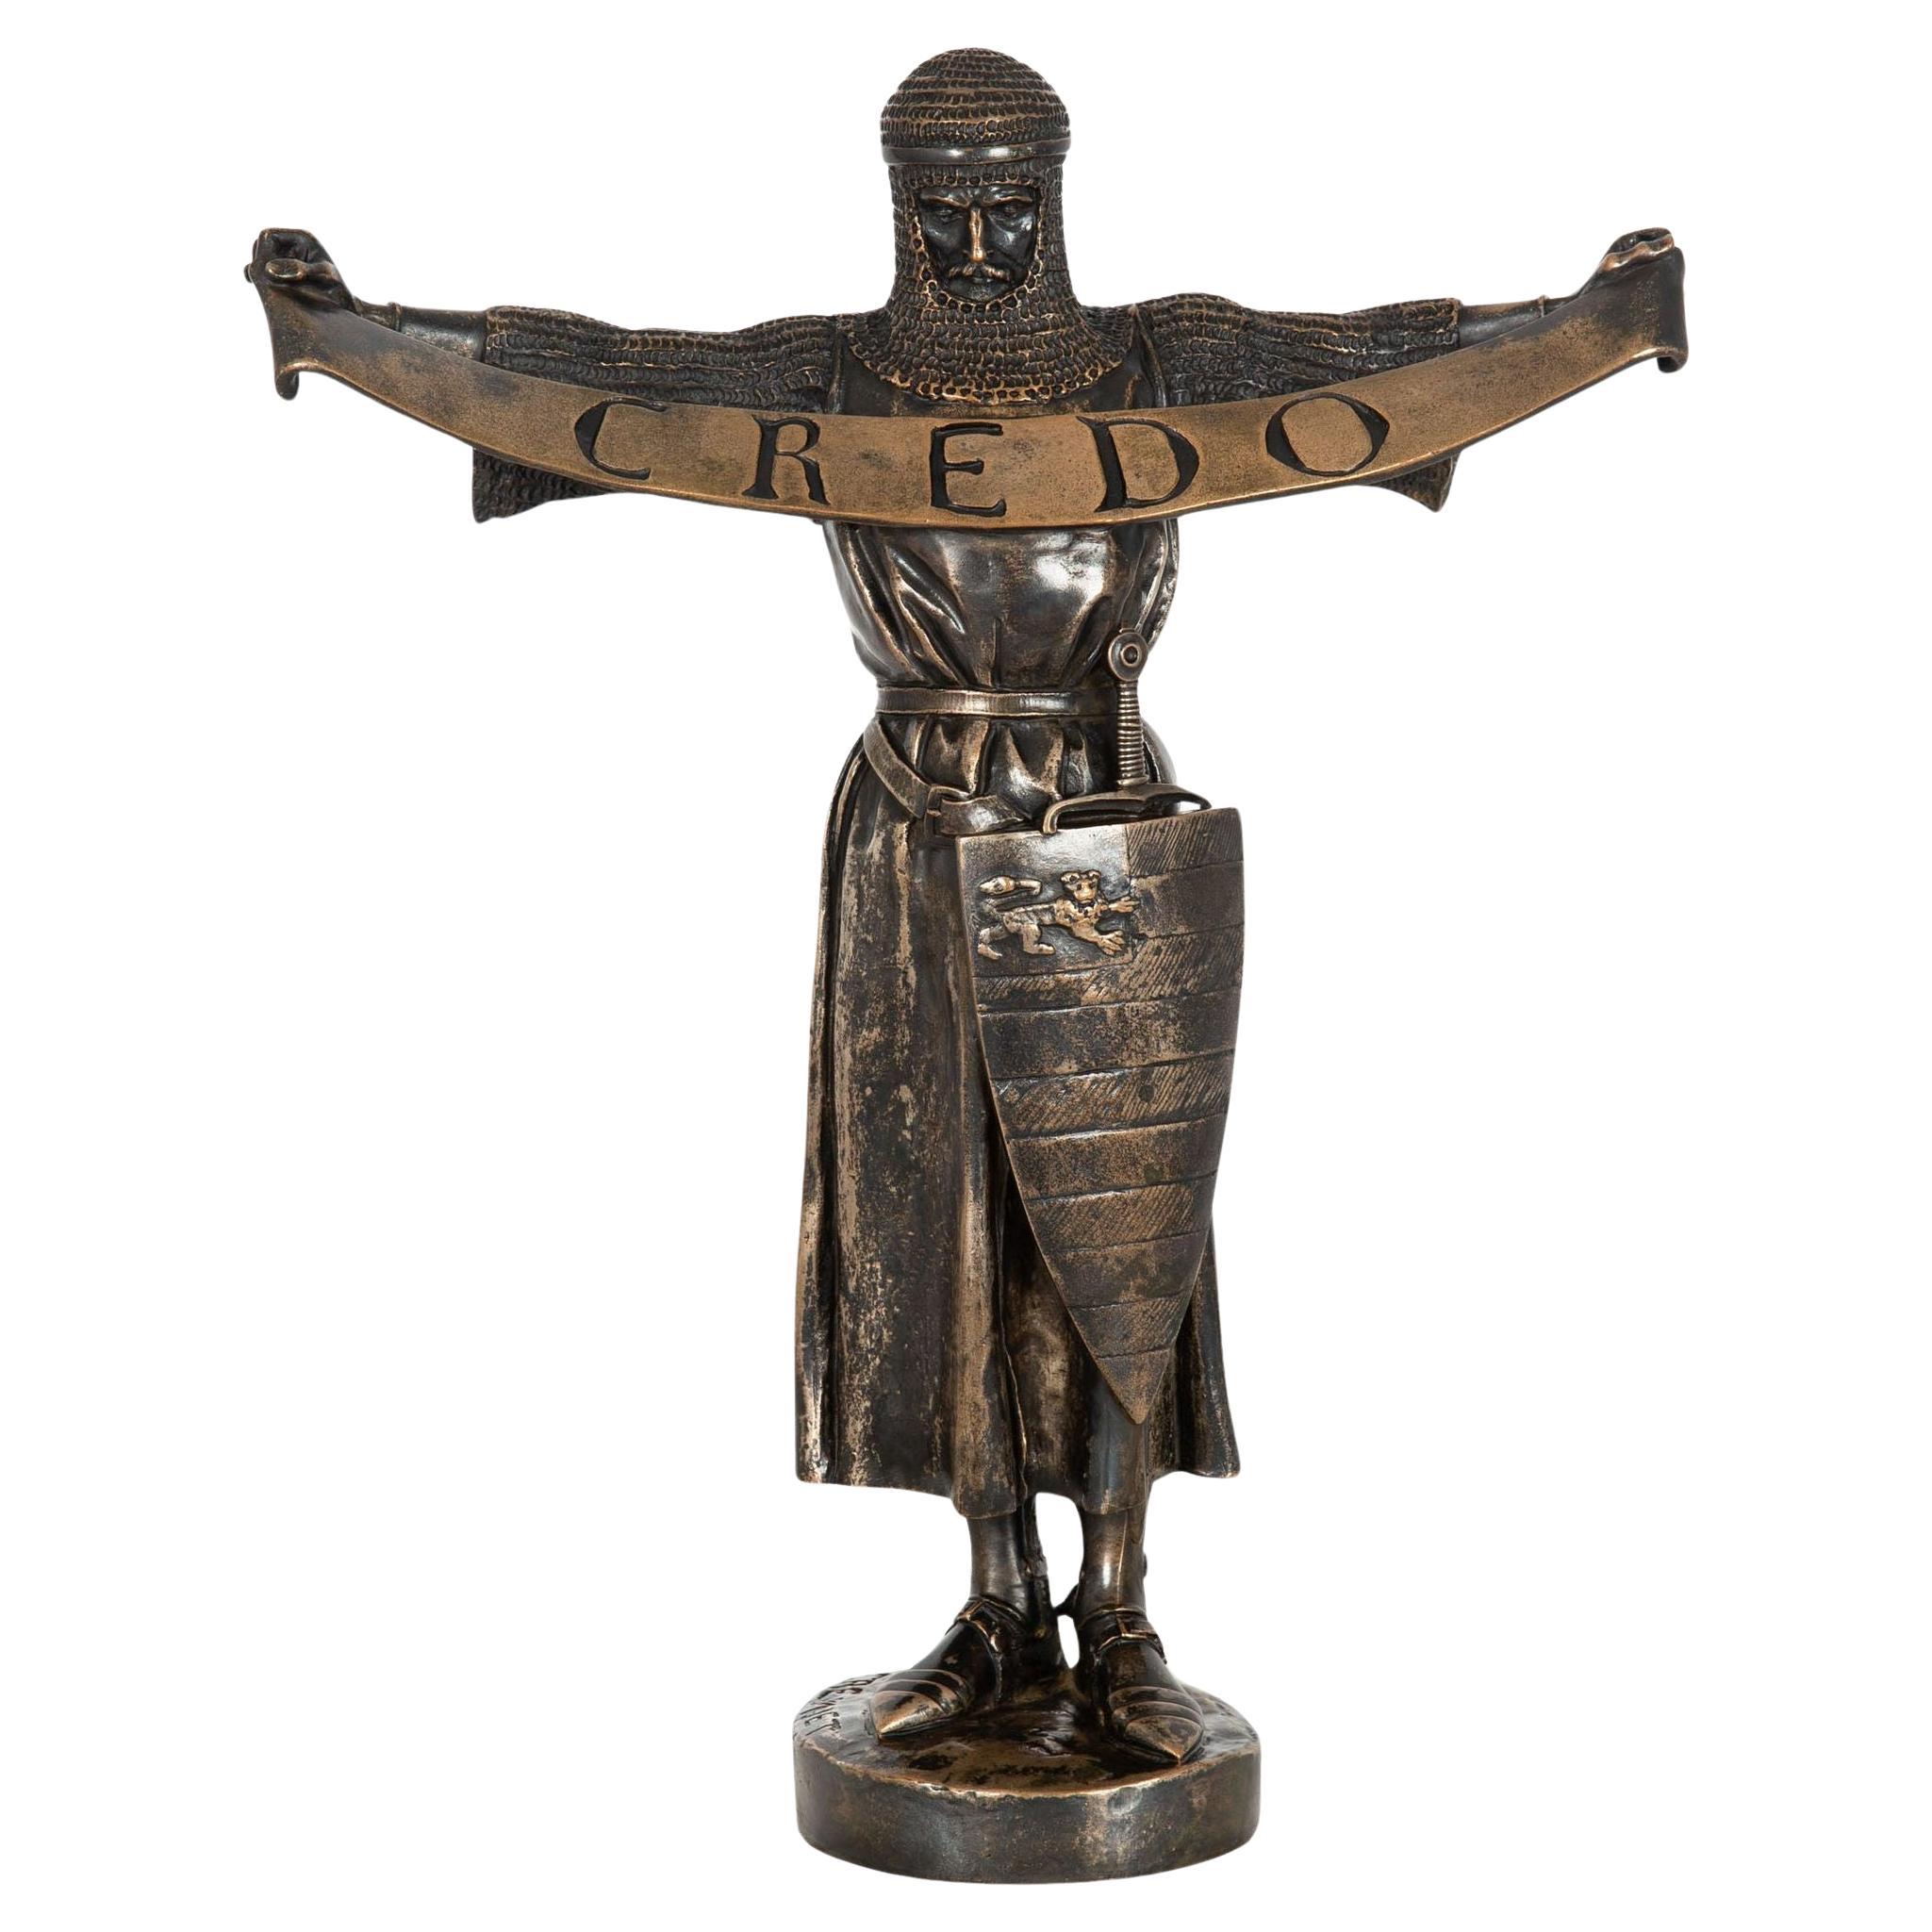 Rare French Antique Bronze Sculpture “Credo” by Emmanuel Fremiet